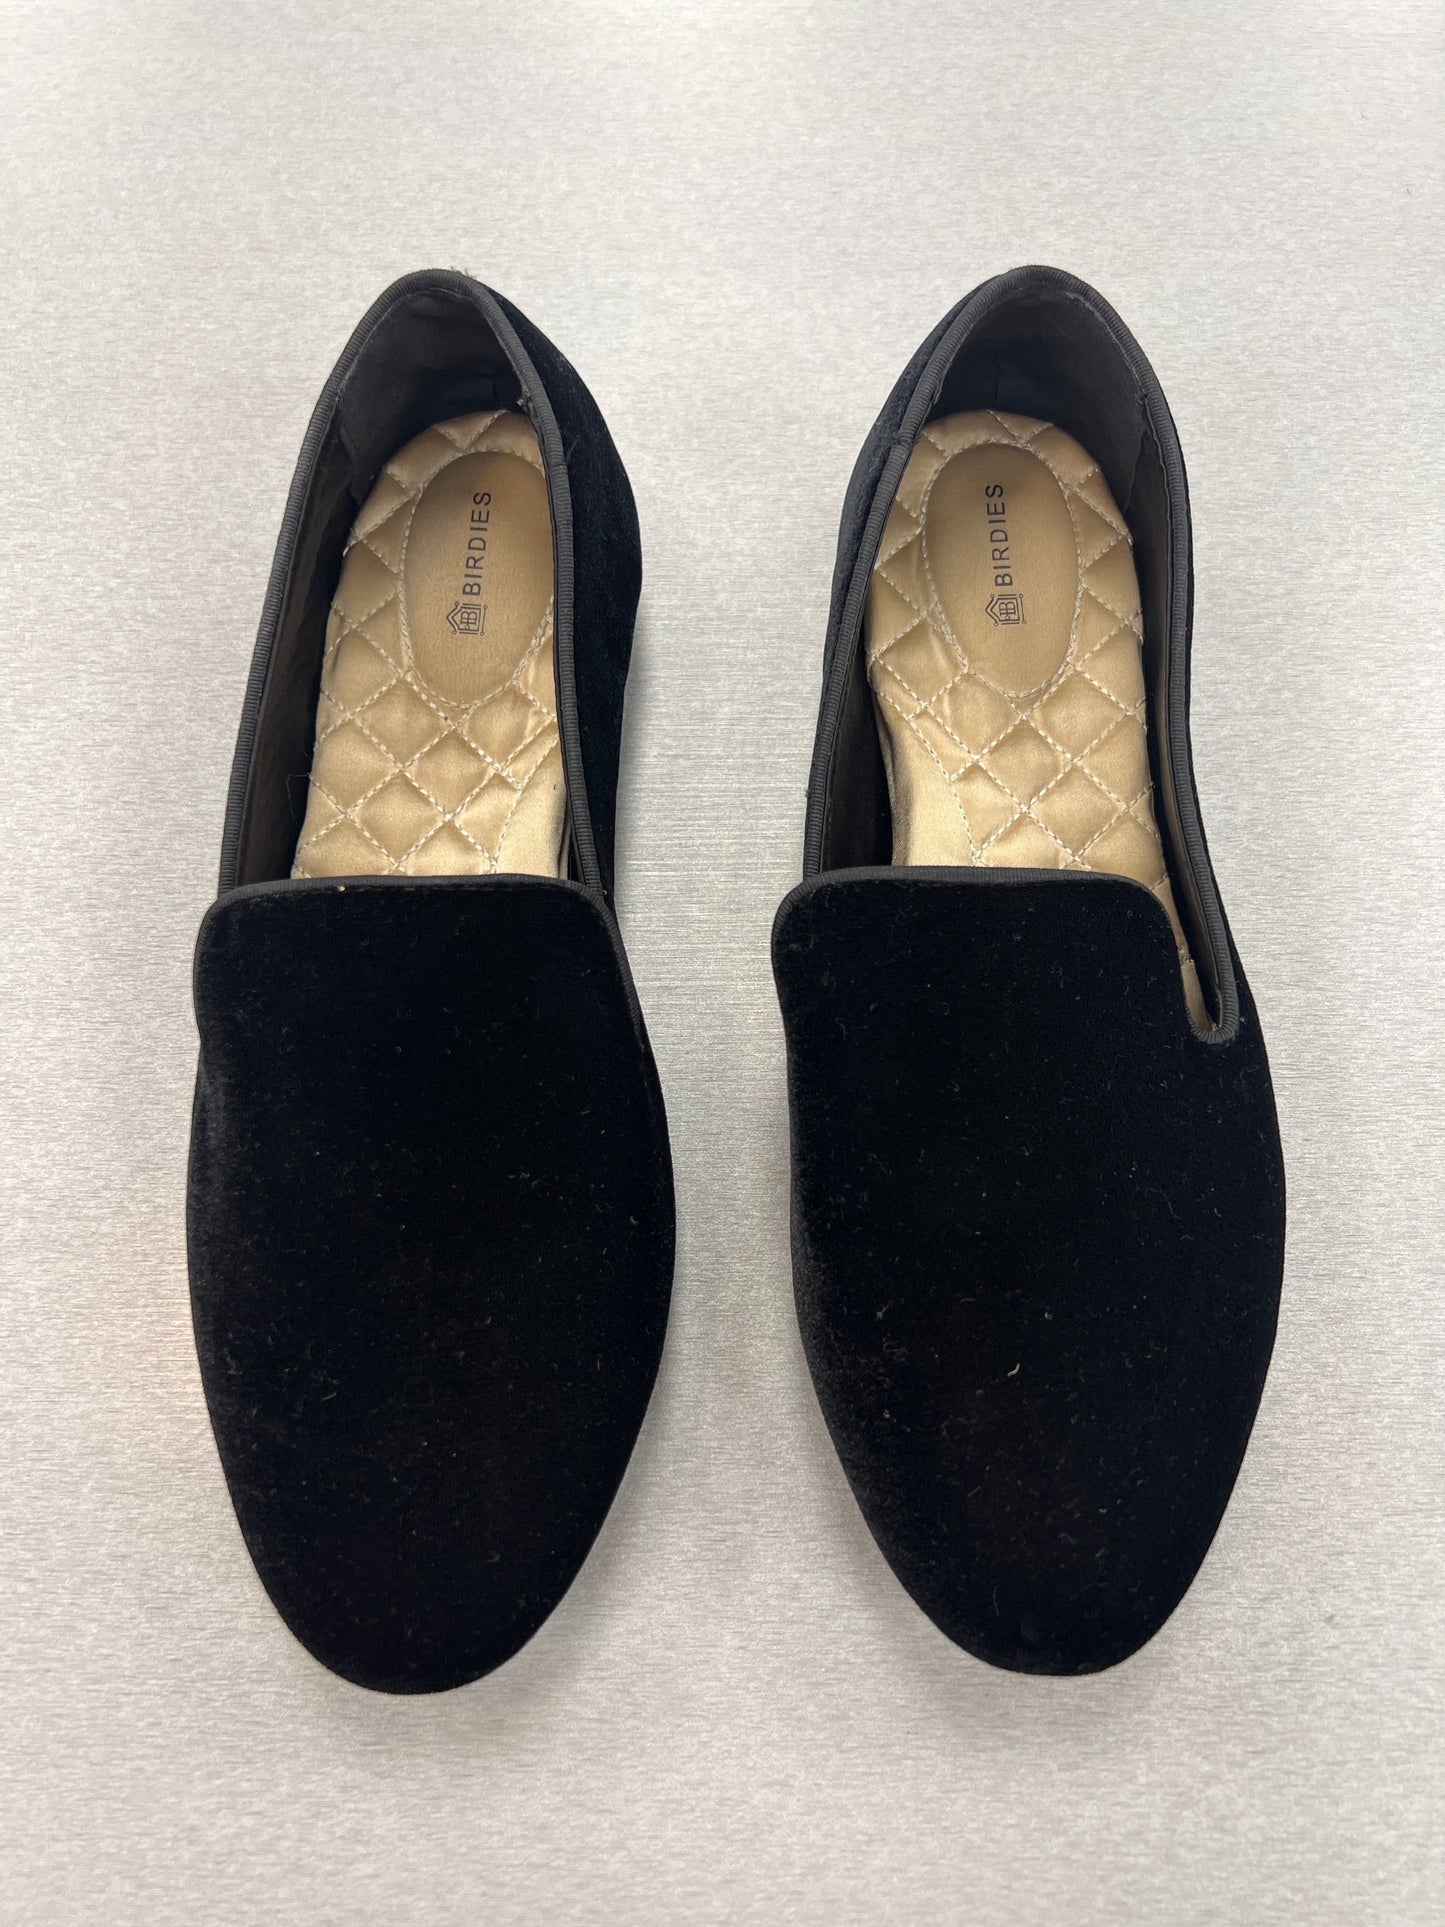 Black Shoes Flats Cma, Size 9.5